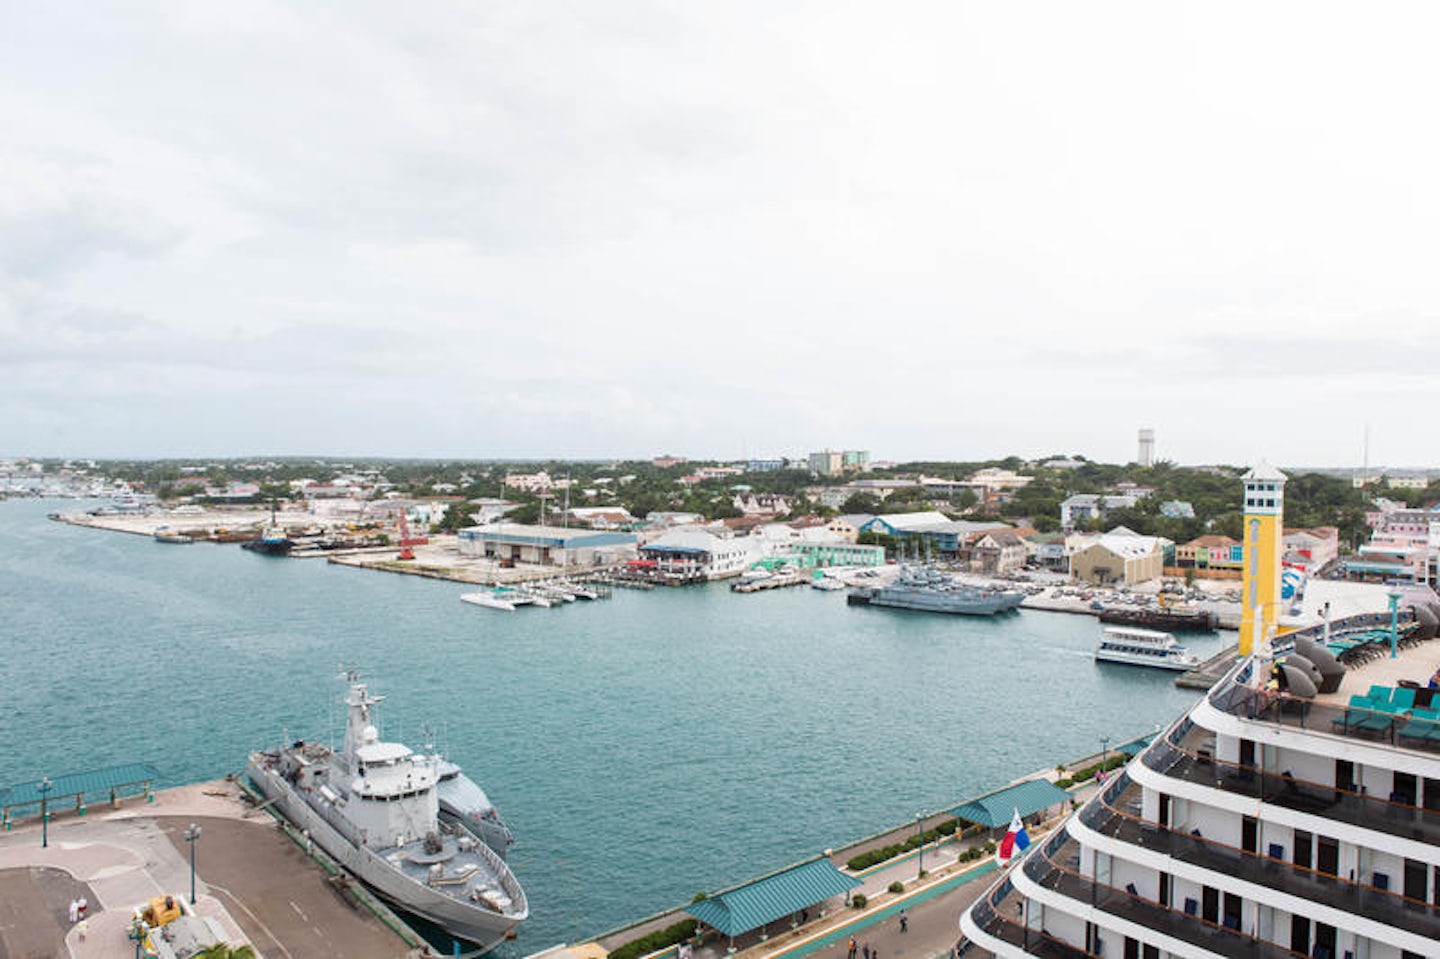 Nassau Cruise Port